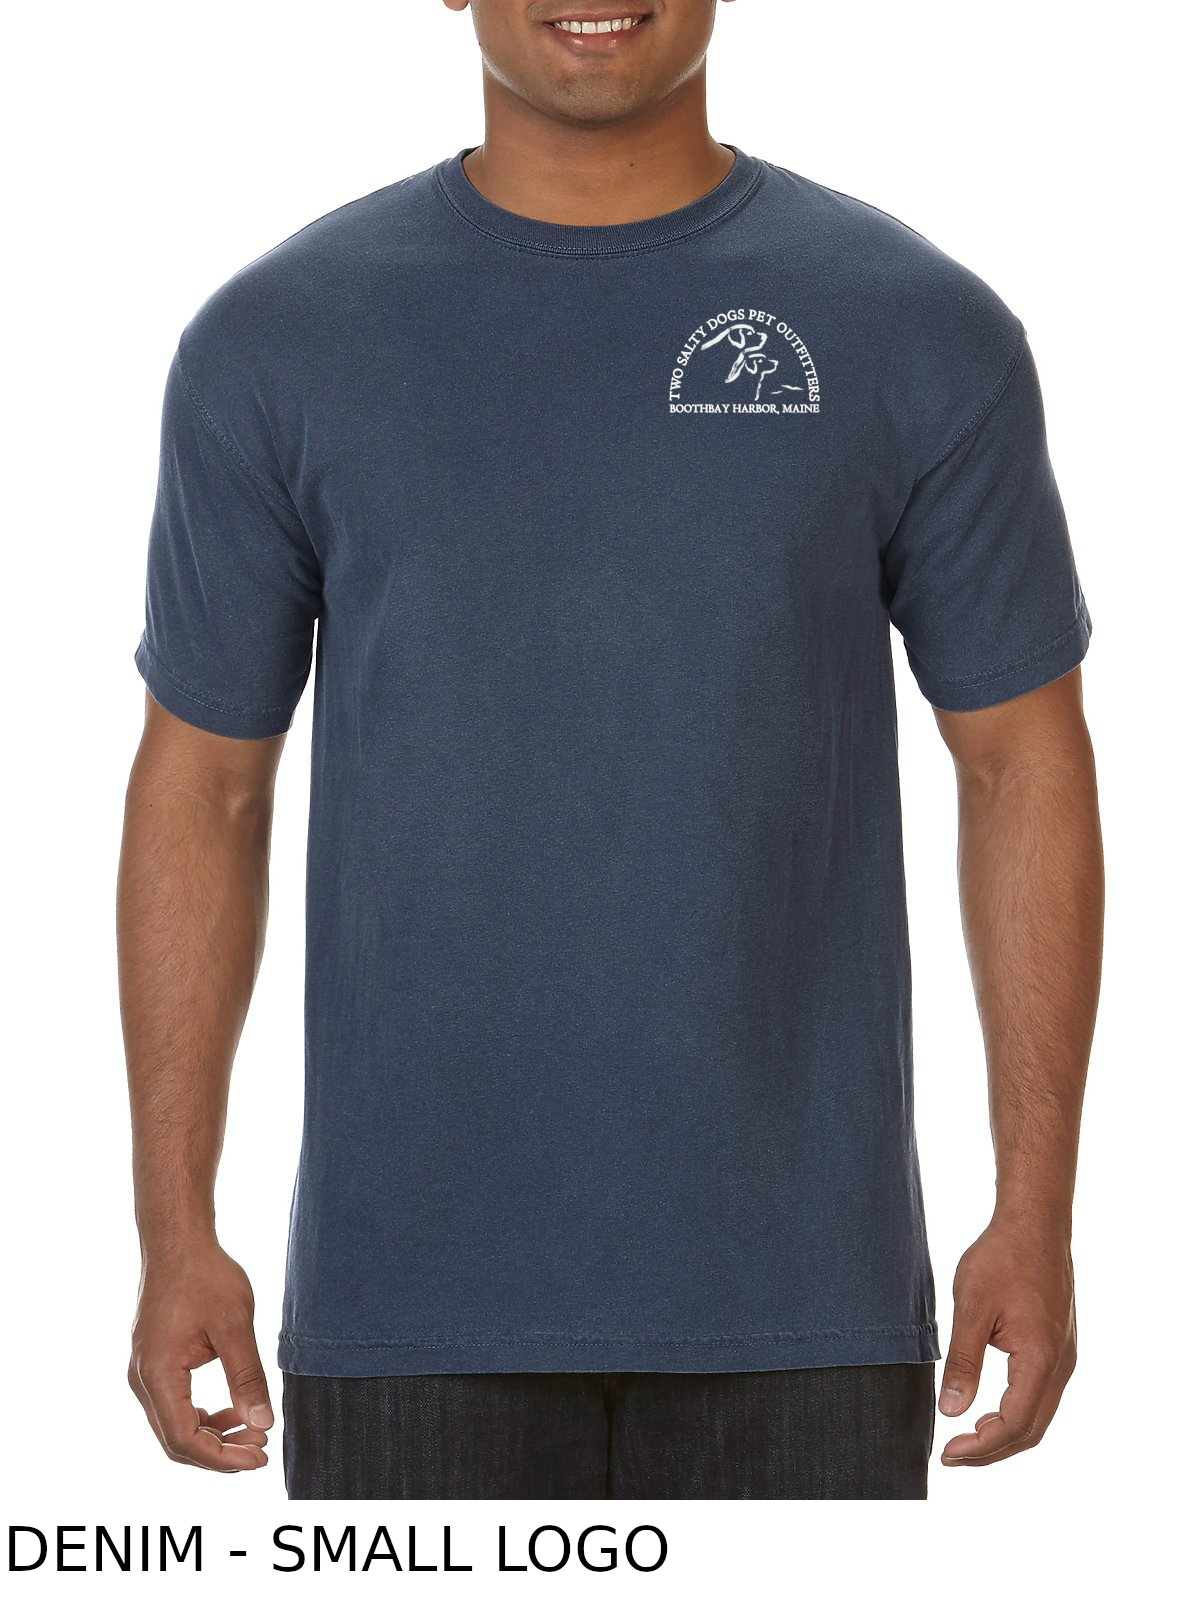 bbha-ss-t-shirt-no-pocket-denim-front-small-logo